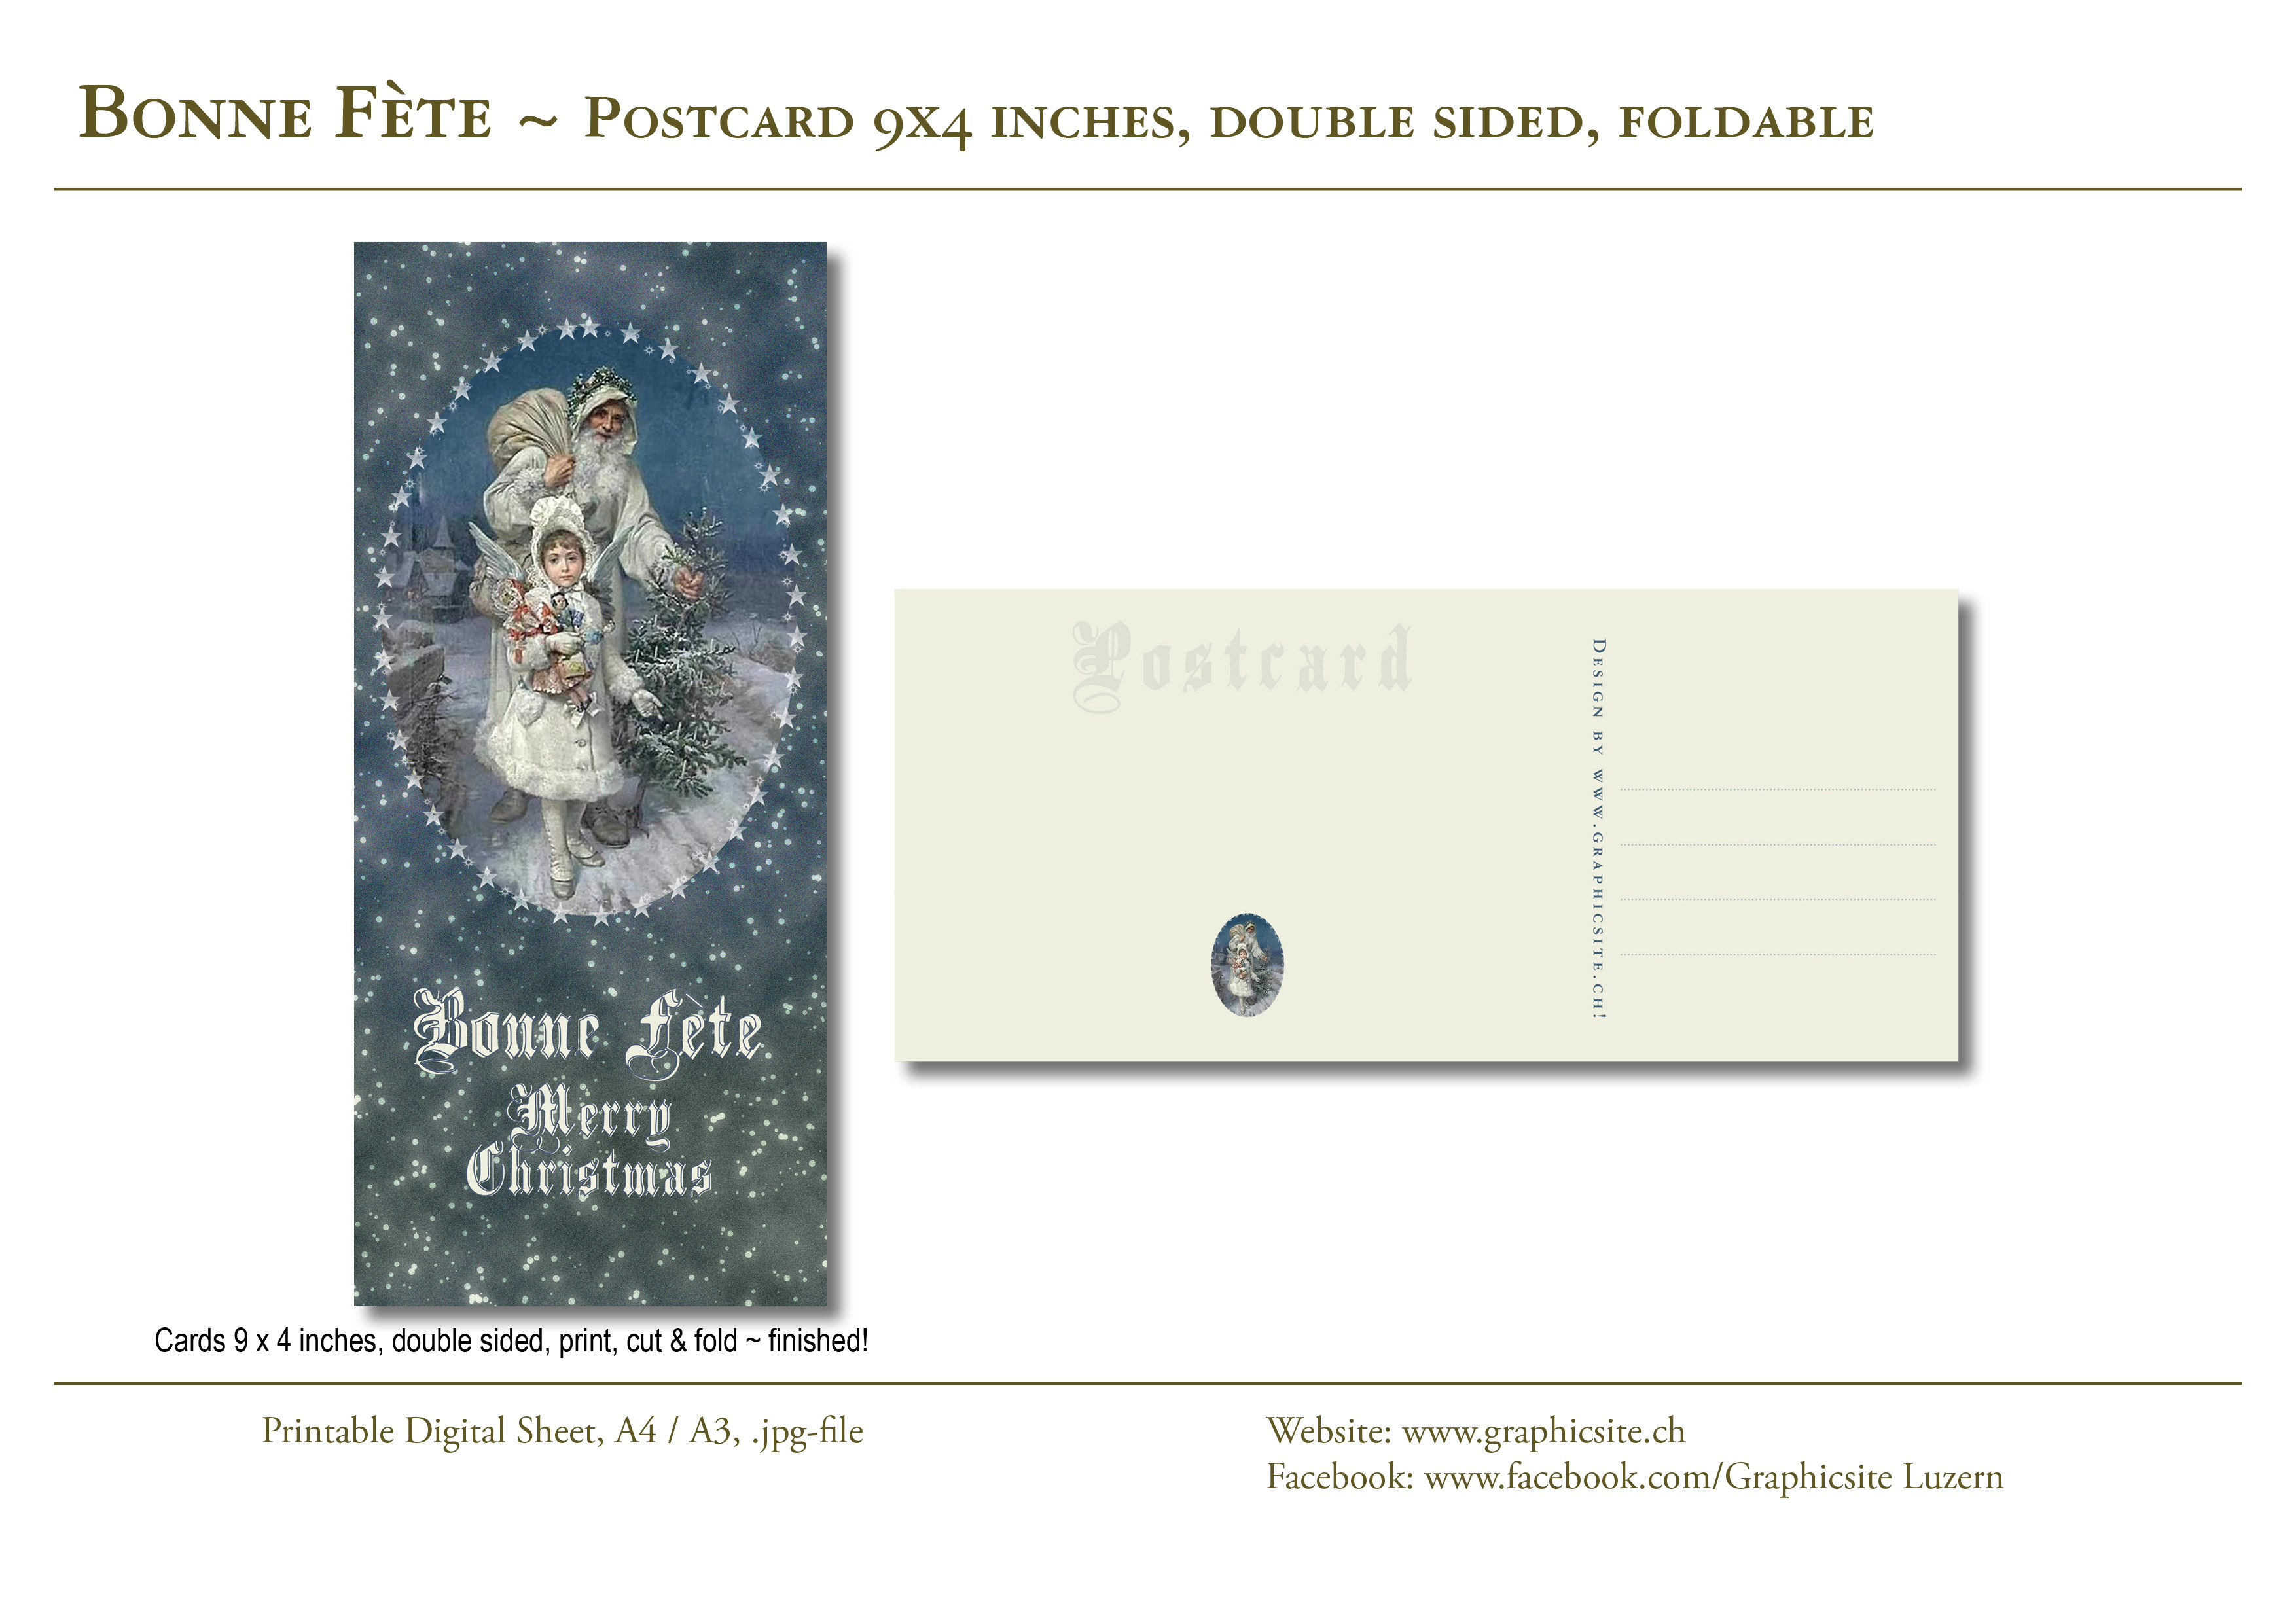 Printable Digital Sheets, Cardmaking, Greeting Cards, Postcard, Christmas, Santa Clause, Winter, Snow,